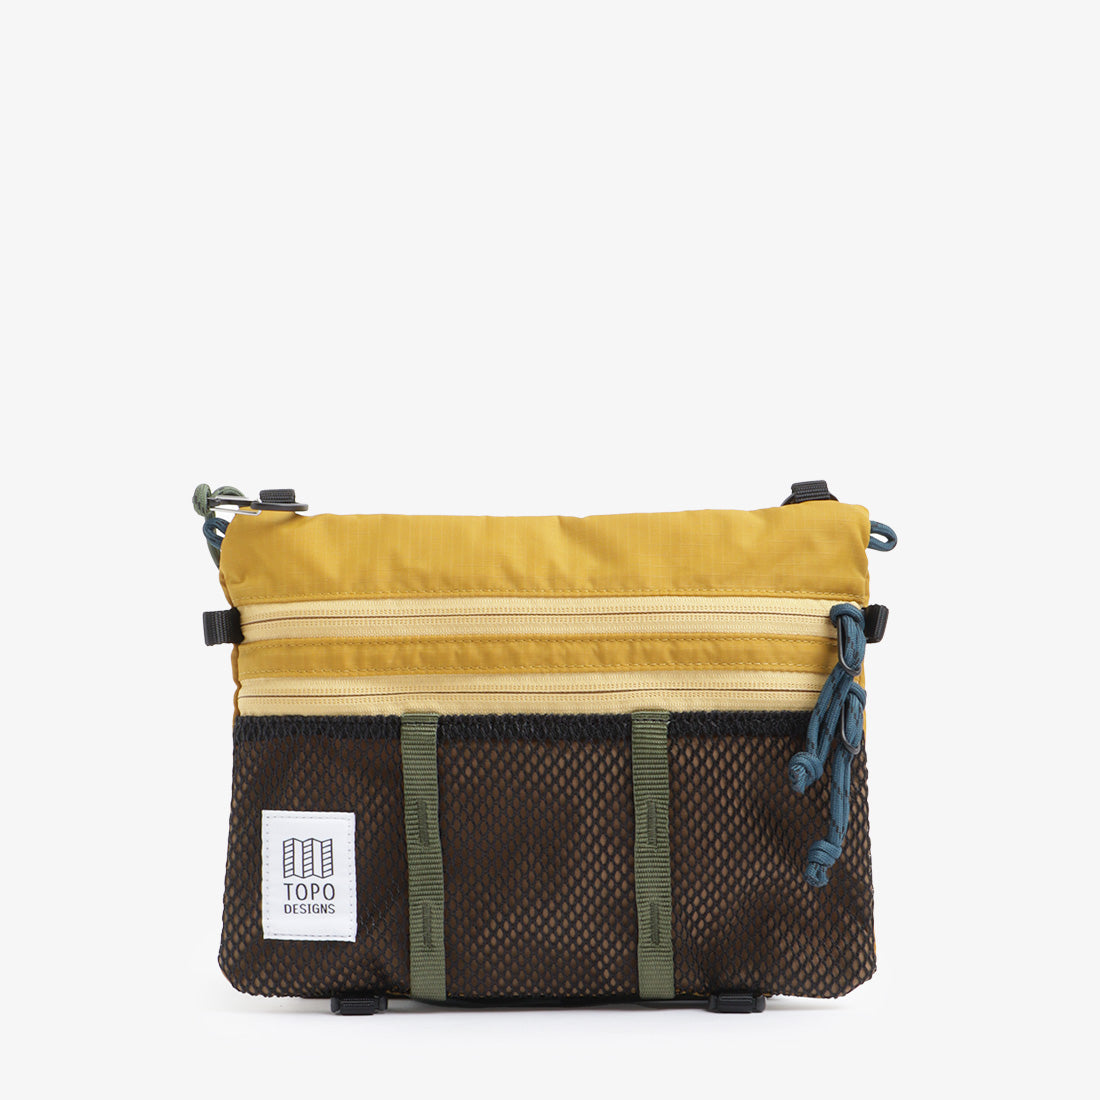 Topo Designs Mountain Accessory Shoulder Bag, Mustard/Dark Khaki, Detail Shot 1